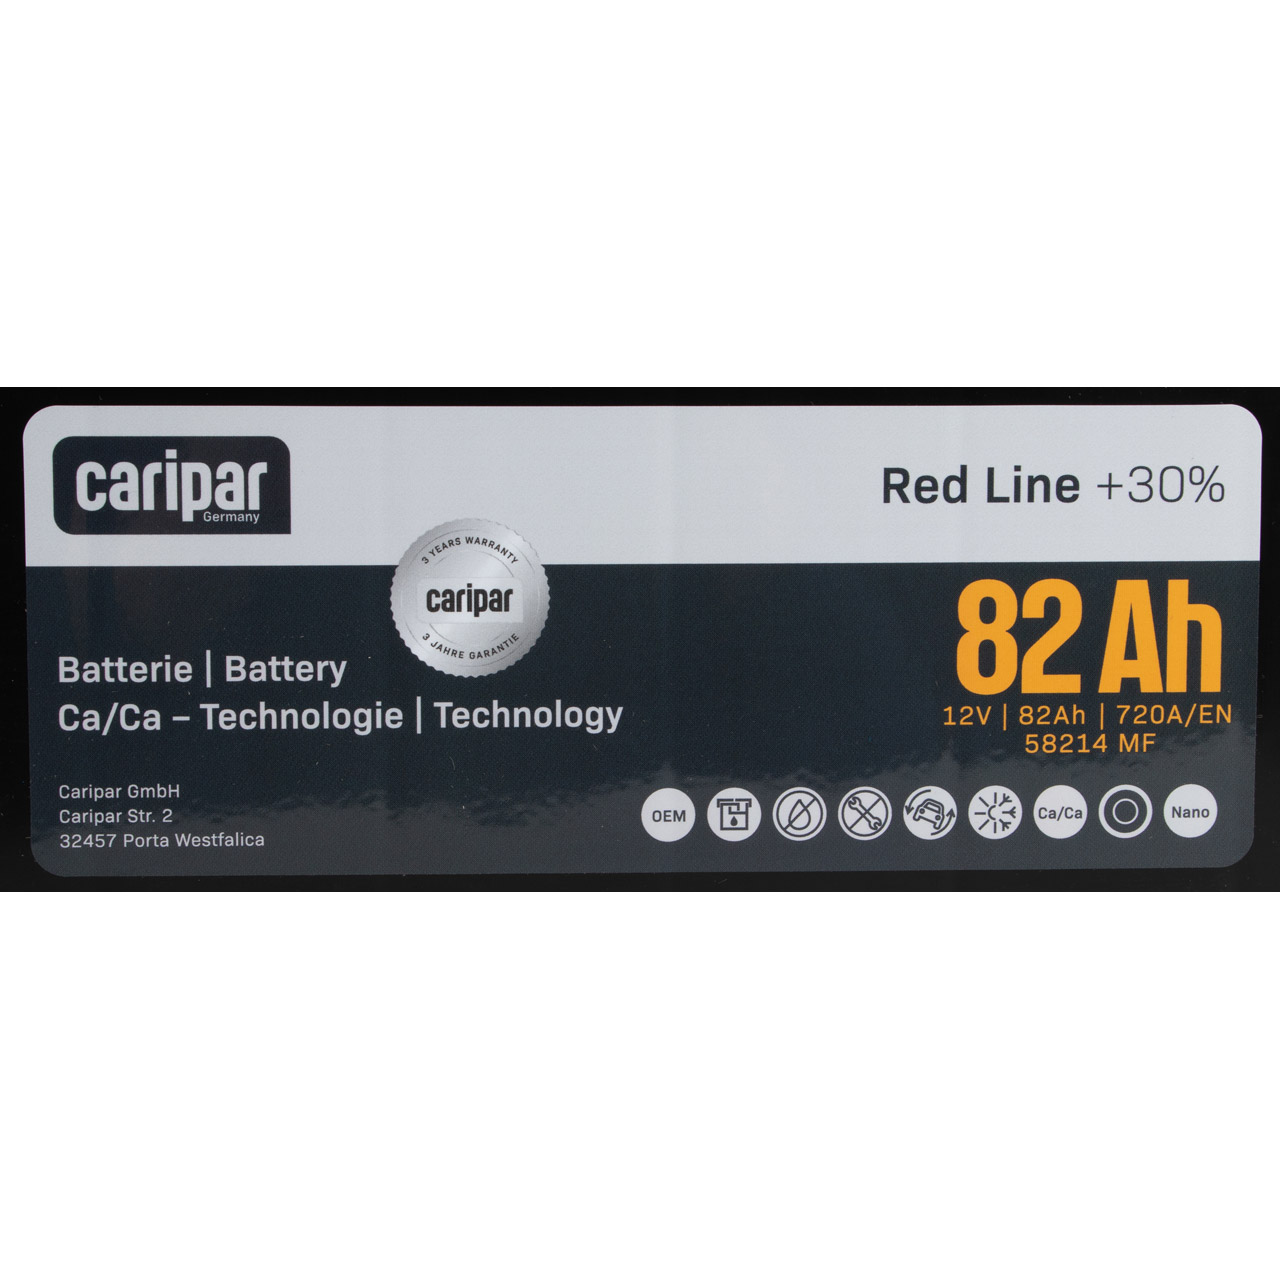 CARIPAR RED LINE +30% PKW KFZ Autobatterie Starterbatterie 12V 82Ah 720A/EN B13